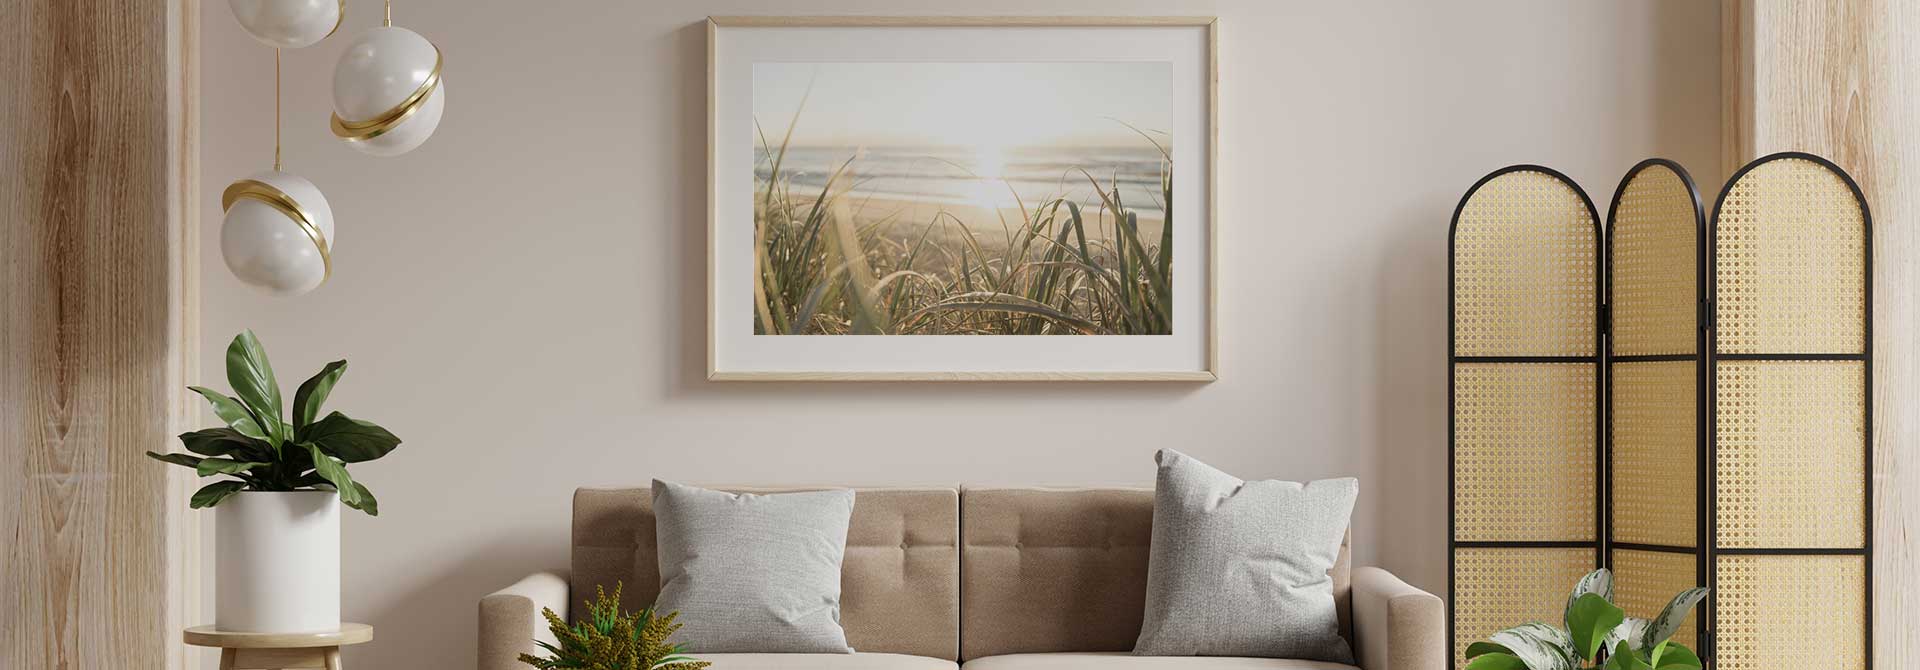 Narrow-Wide-Hotel-lounge-room-with-beach-grass-sunset-art-print